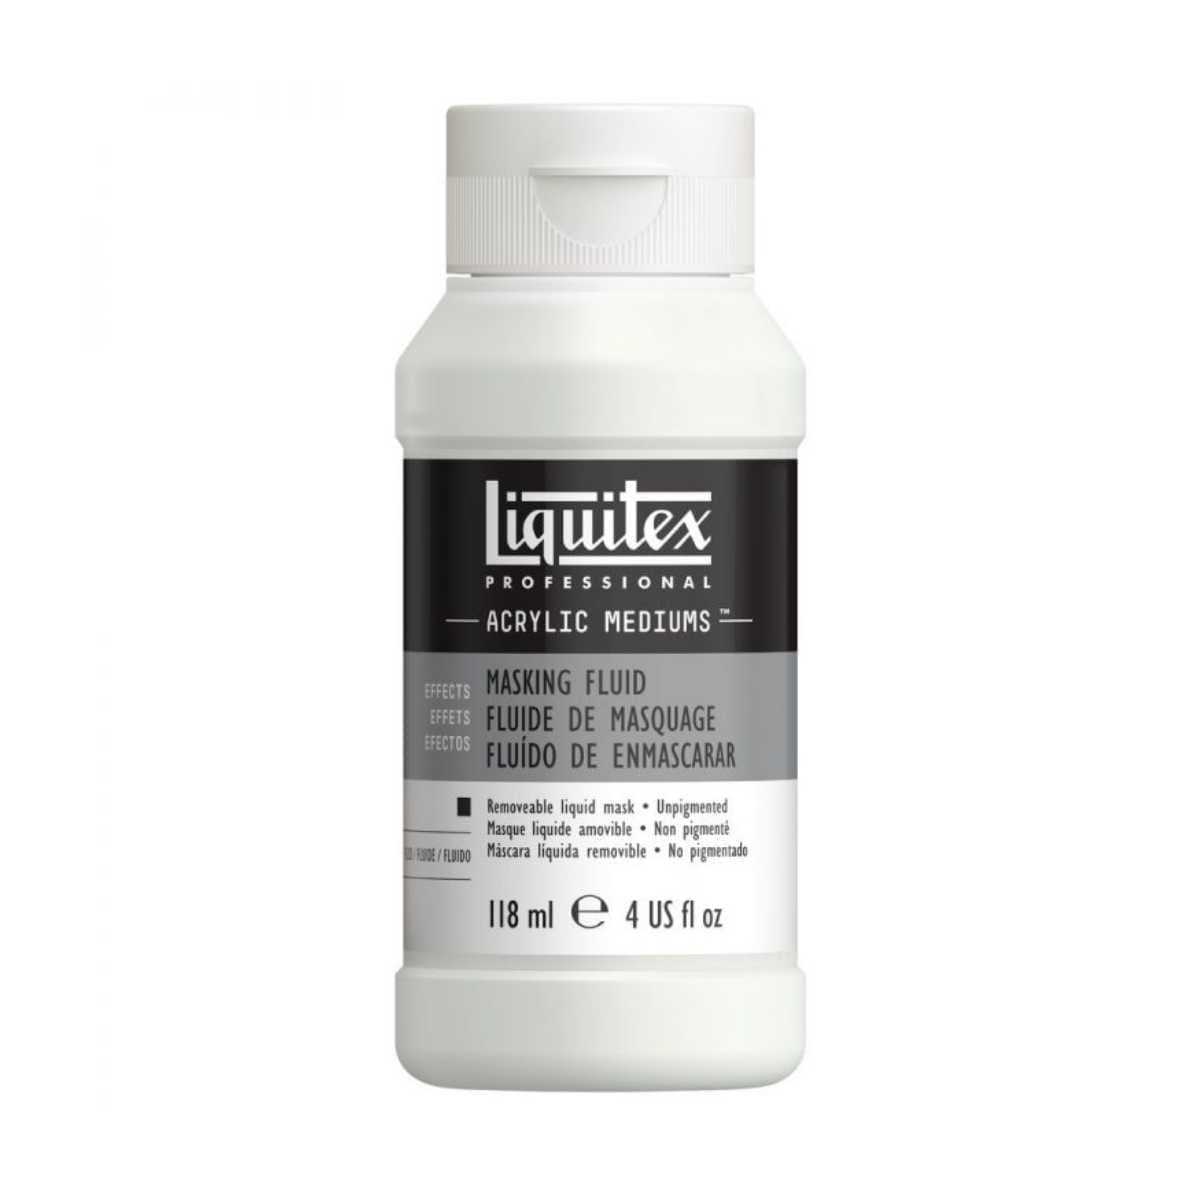 LIQUITEX MASKING FLUID Liquitex - Masking Fluid - 118ml / 4oz - Acrylic Medium - Item #5404